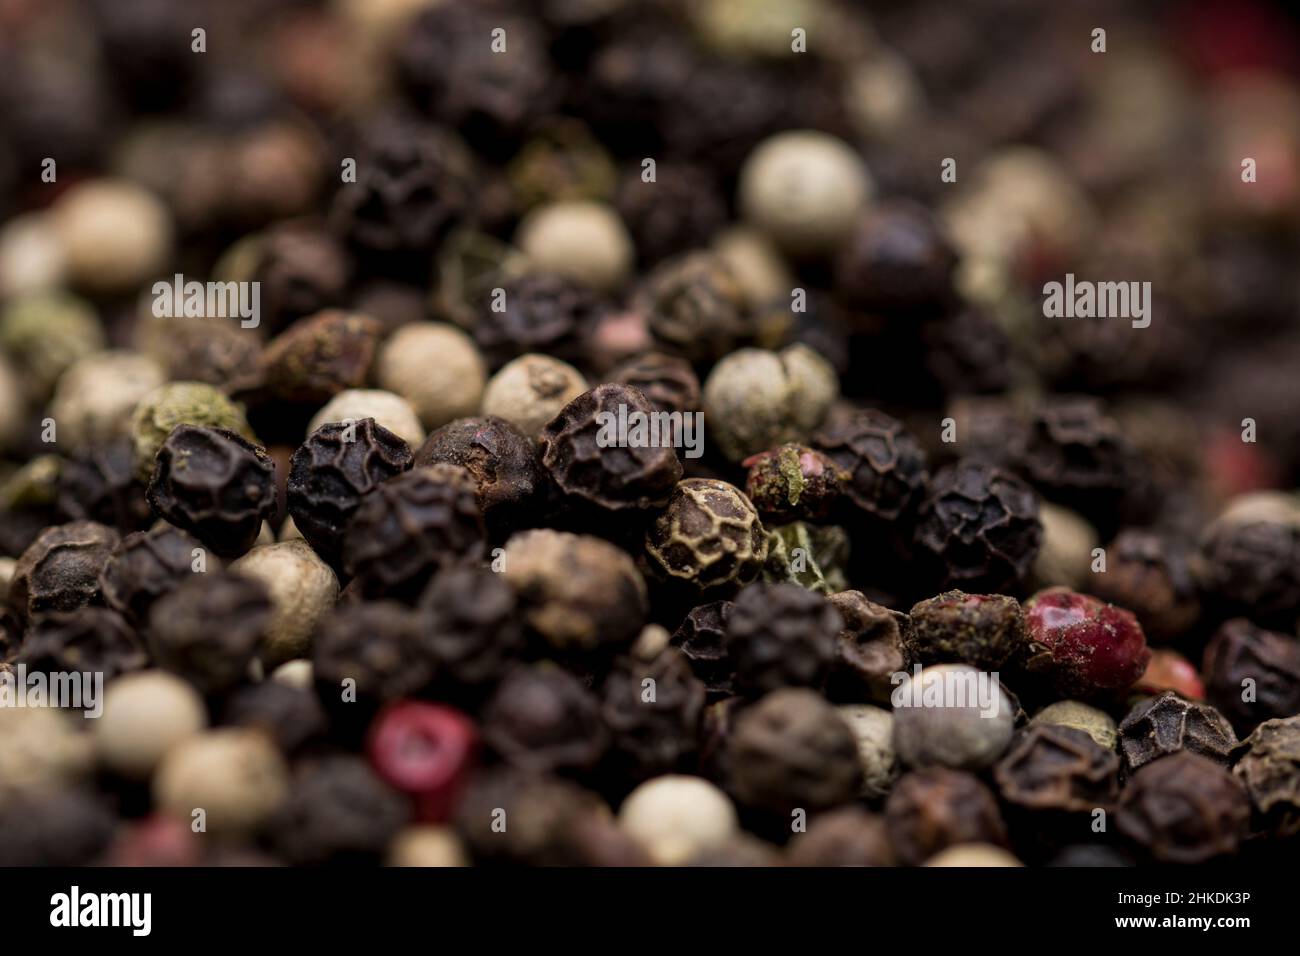 Peppercorn close up black pepper. Macro view of peppercorn seeds. Stock Photo